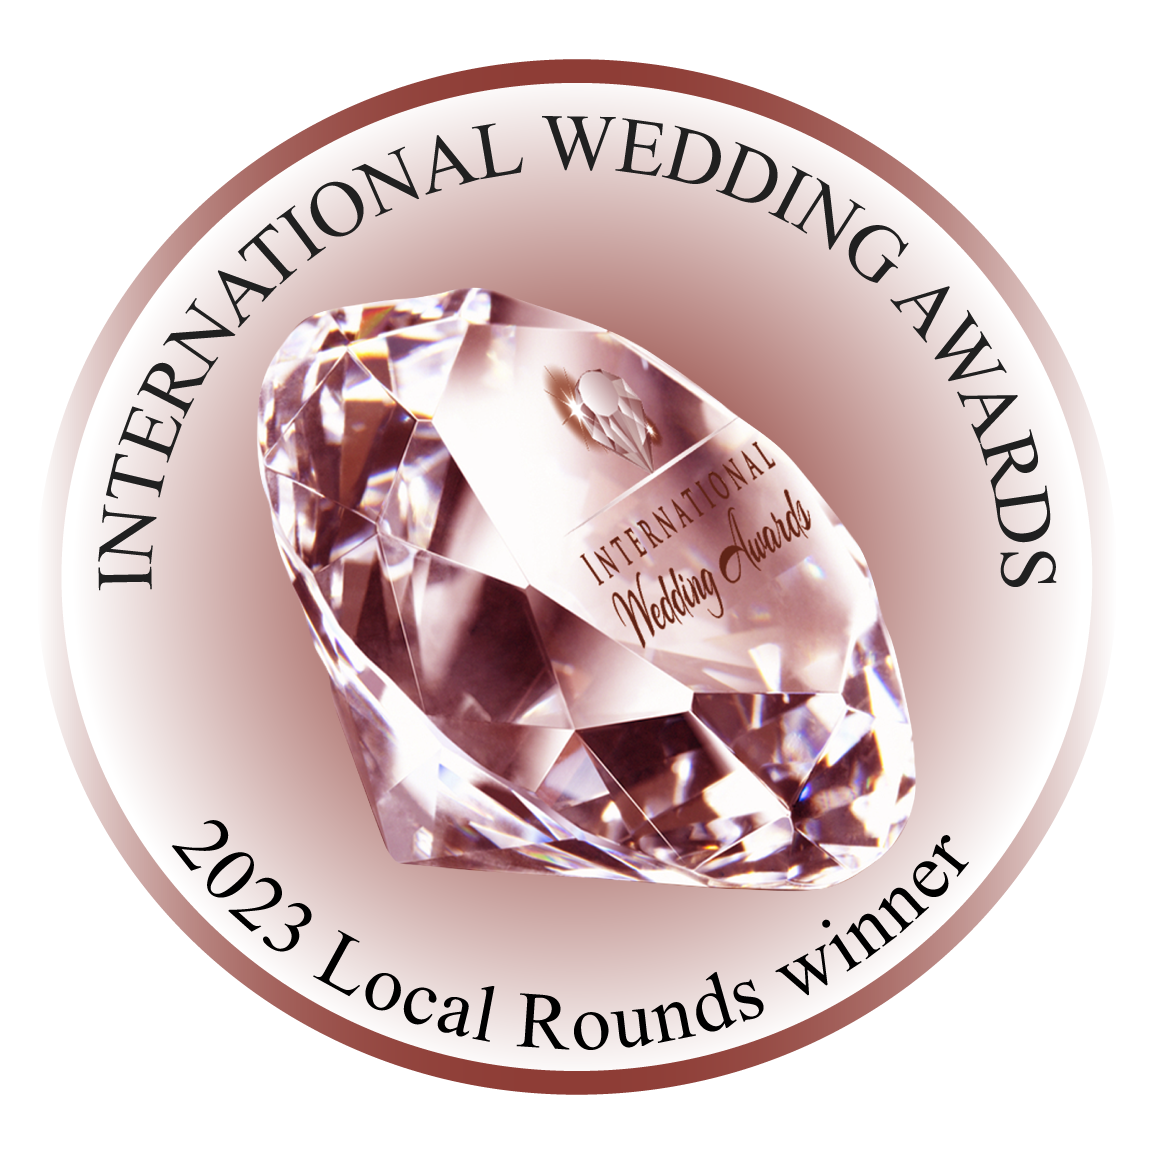 International Wedding Awards Regional Winner 2022